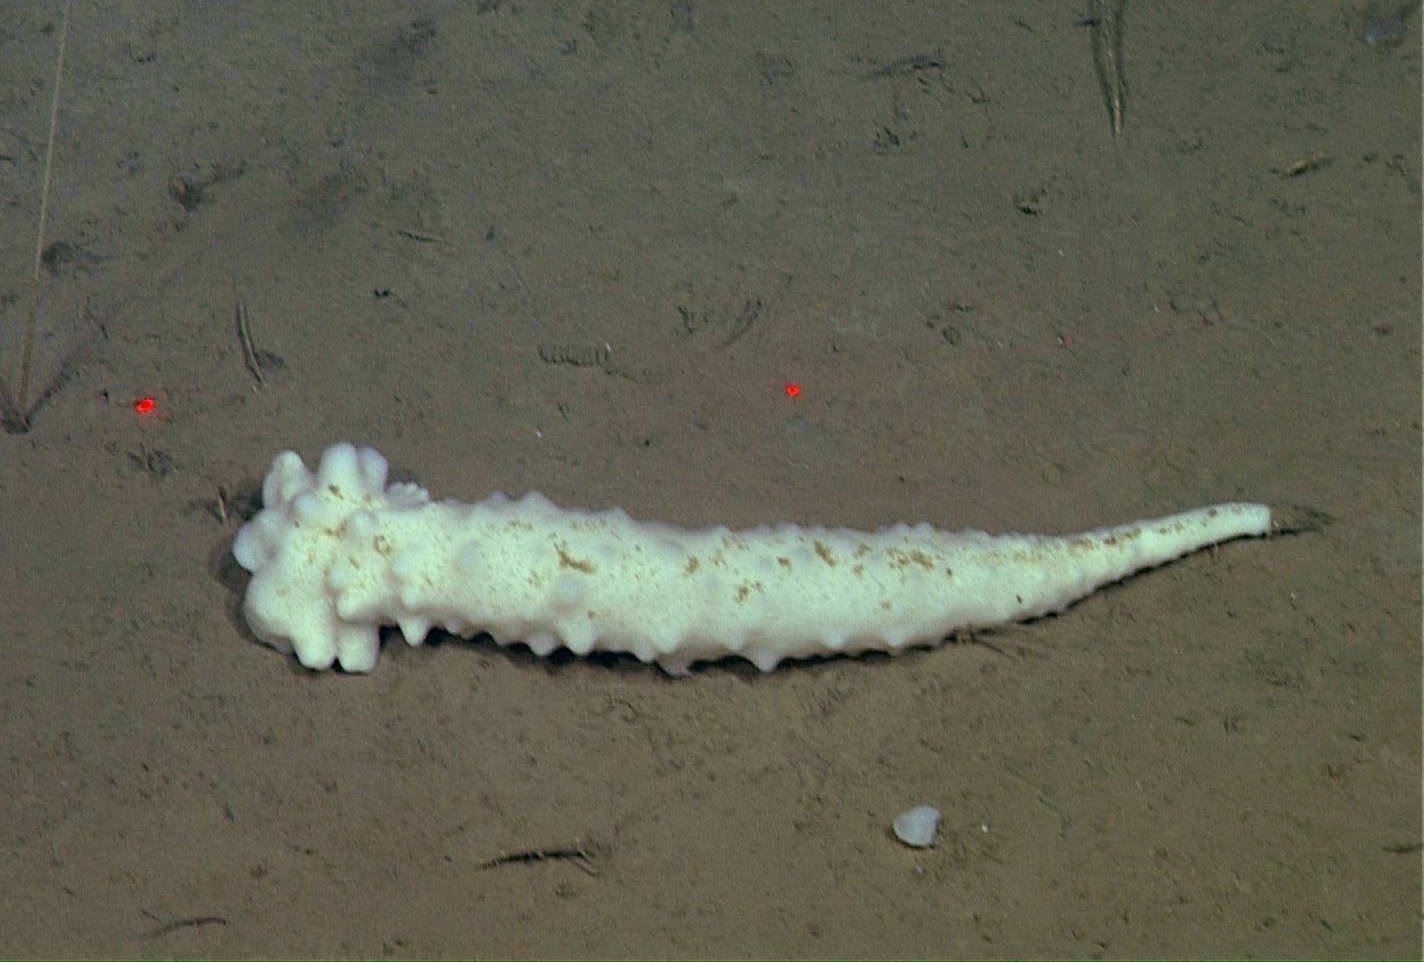 Hexactinellid sponge at Station M (c) Pushed by currents, this trumpet sponge in the genus Hexactinellida, rolls across the muddy seafloor. (c) 2015 MBARI